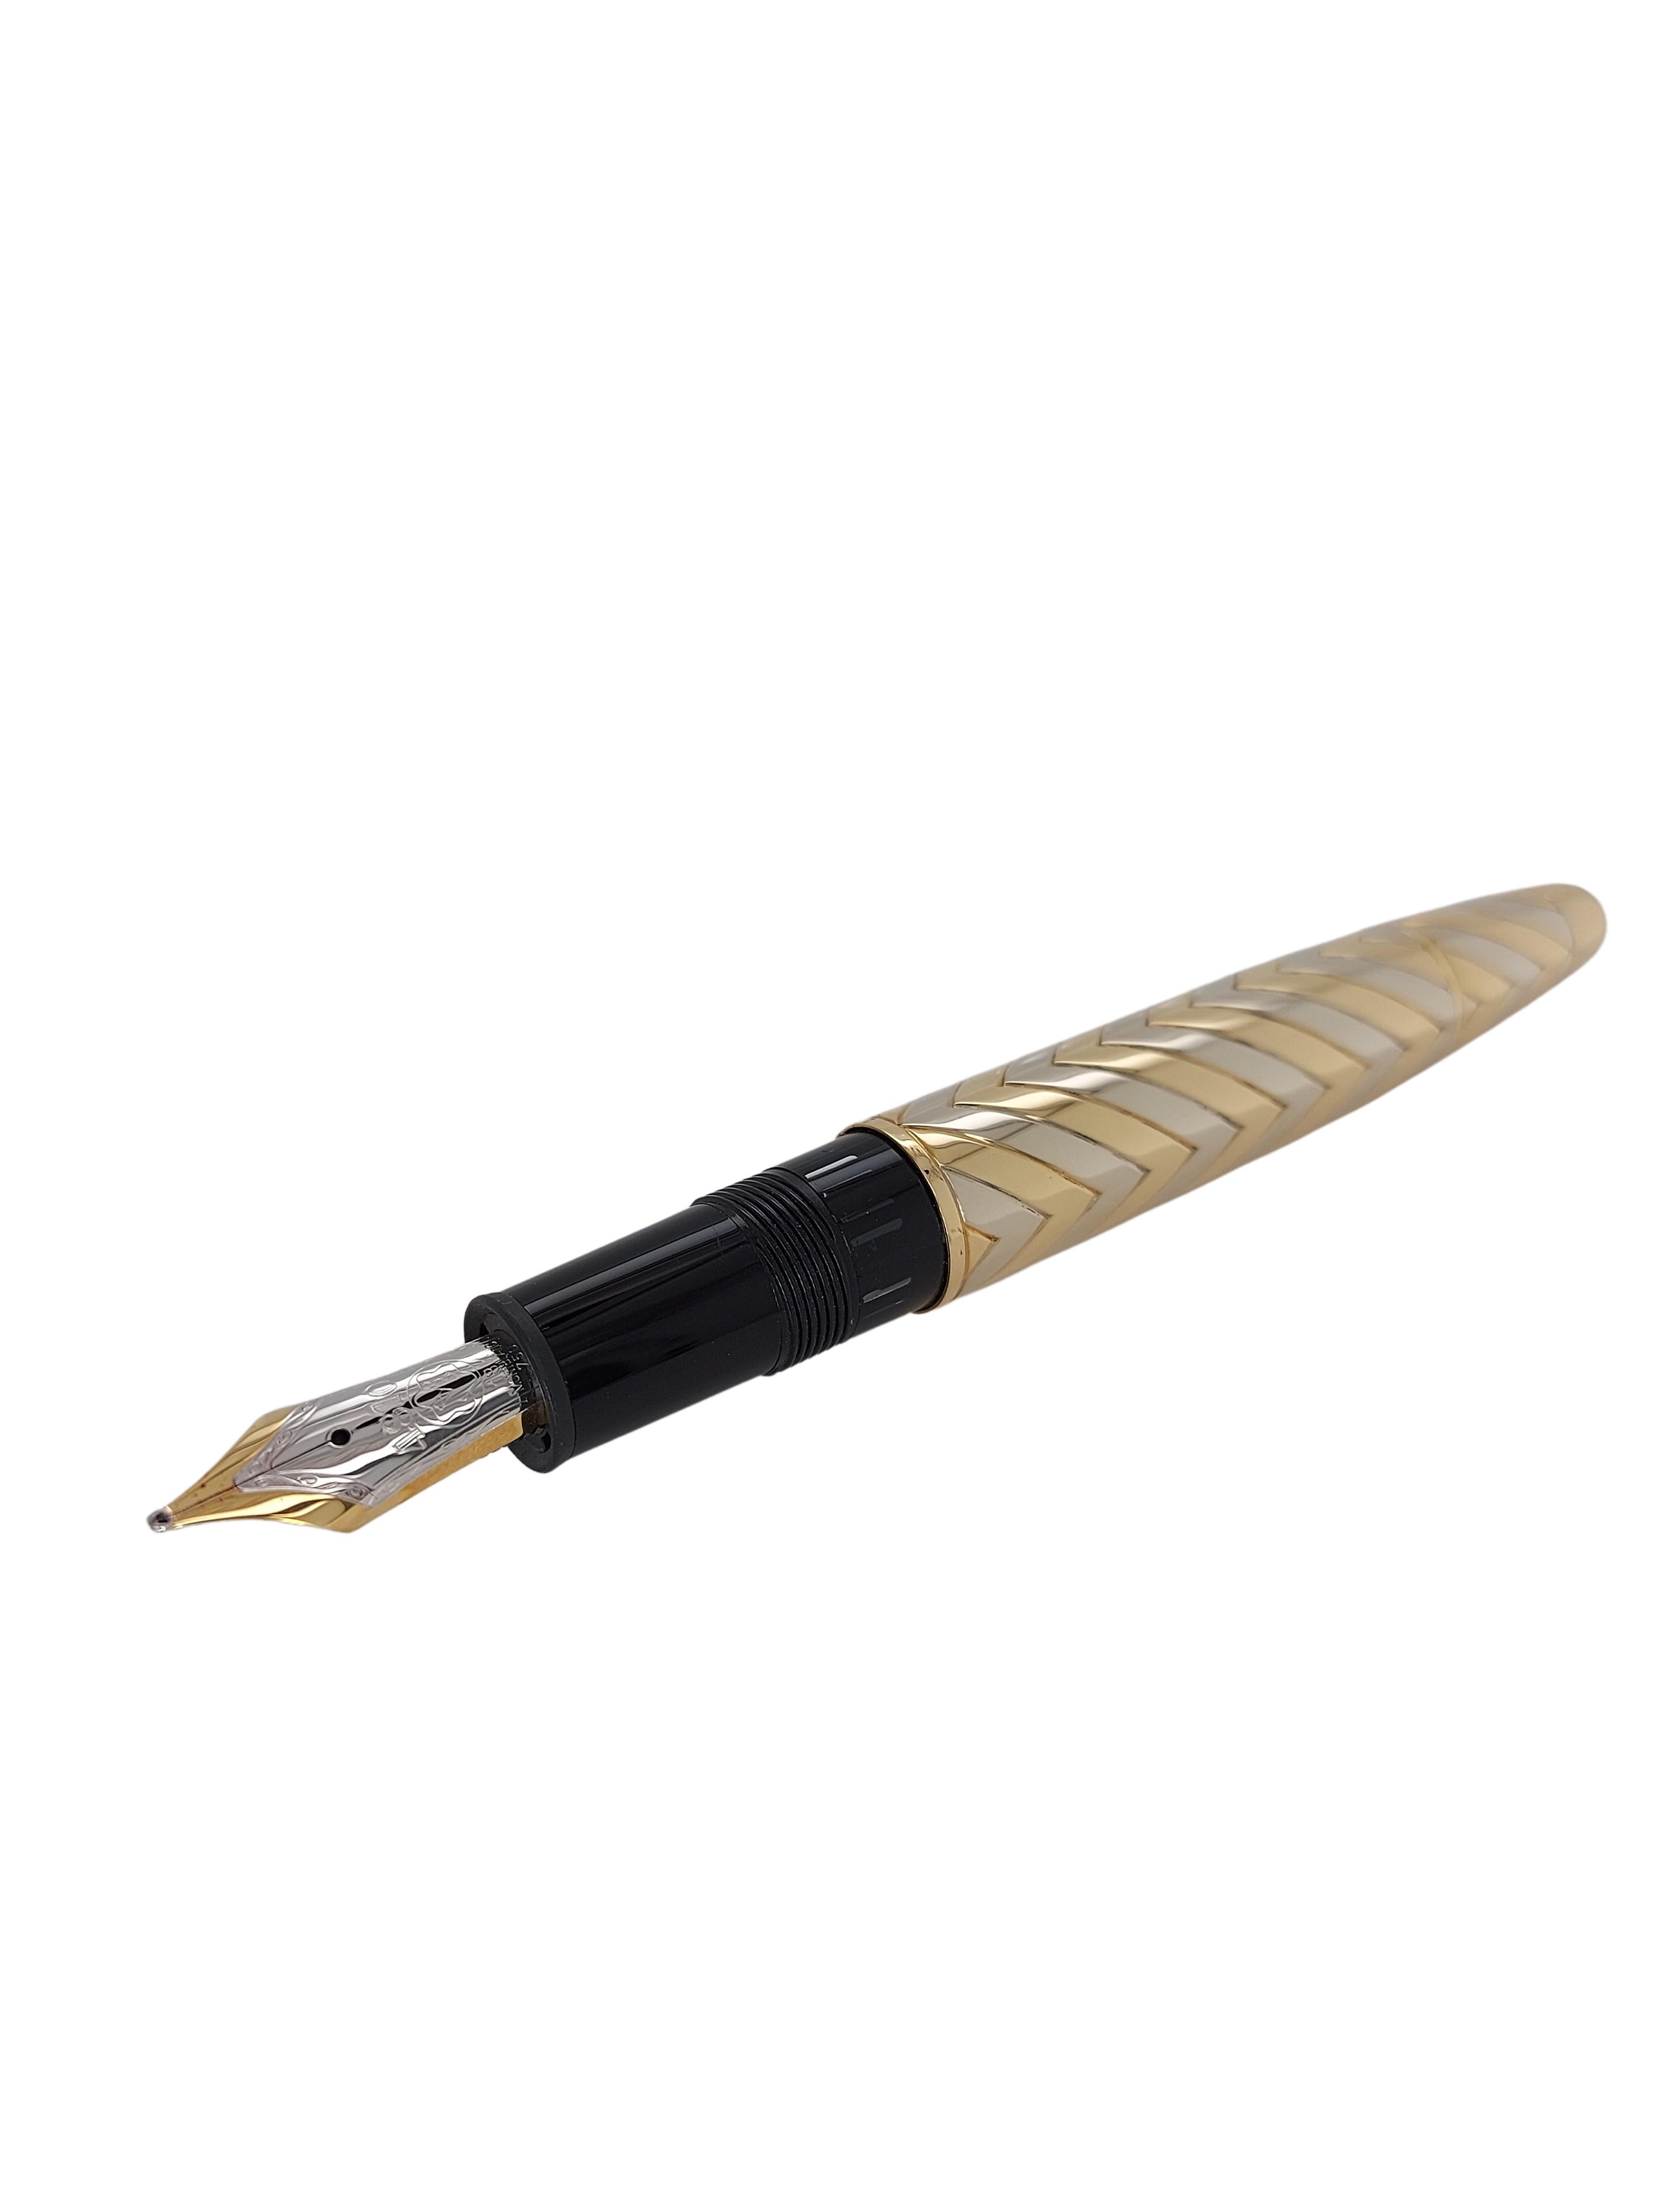 montblanc gold pen